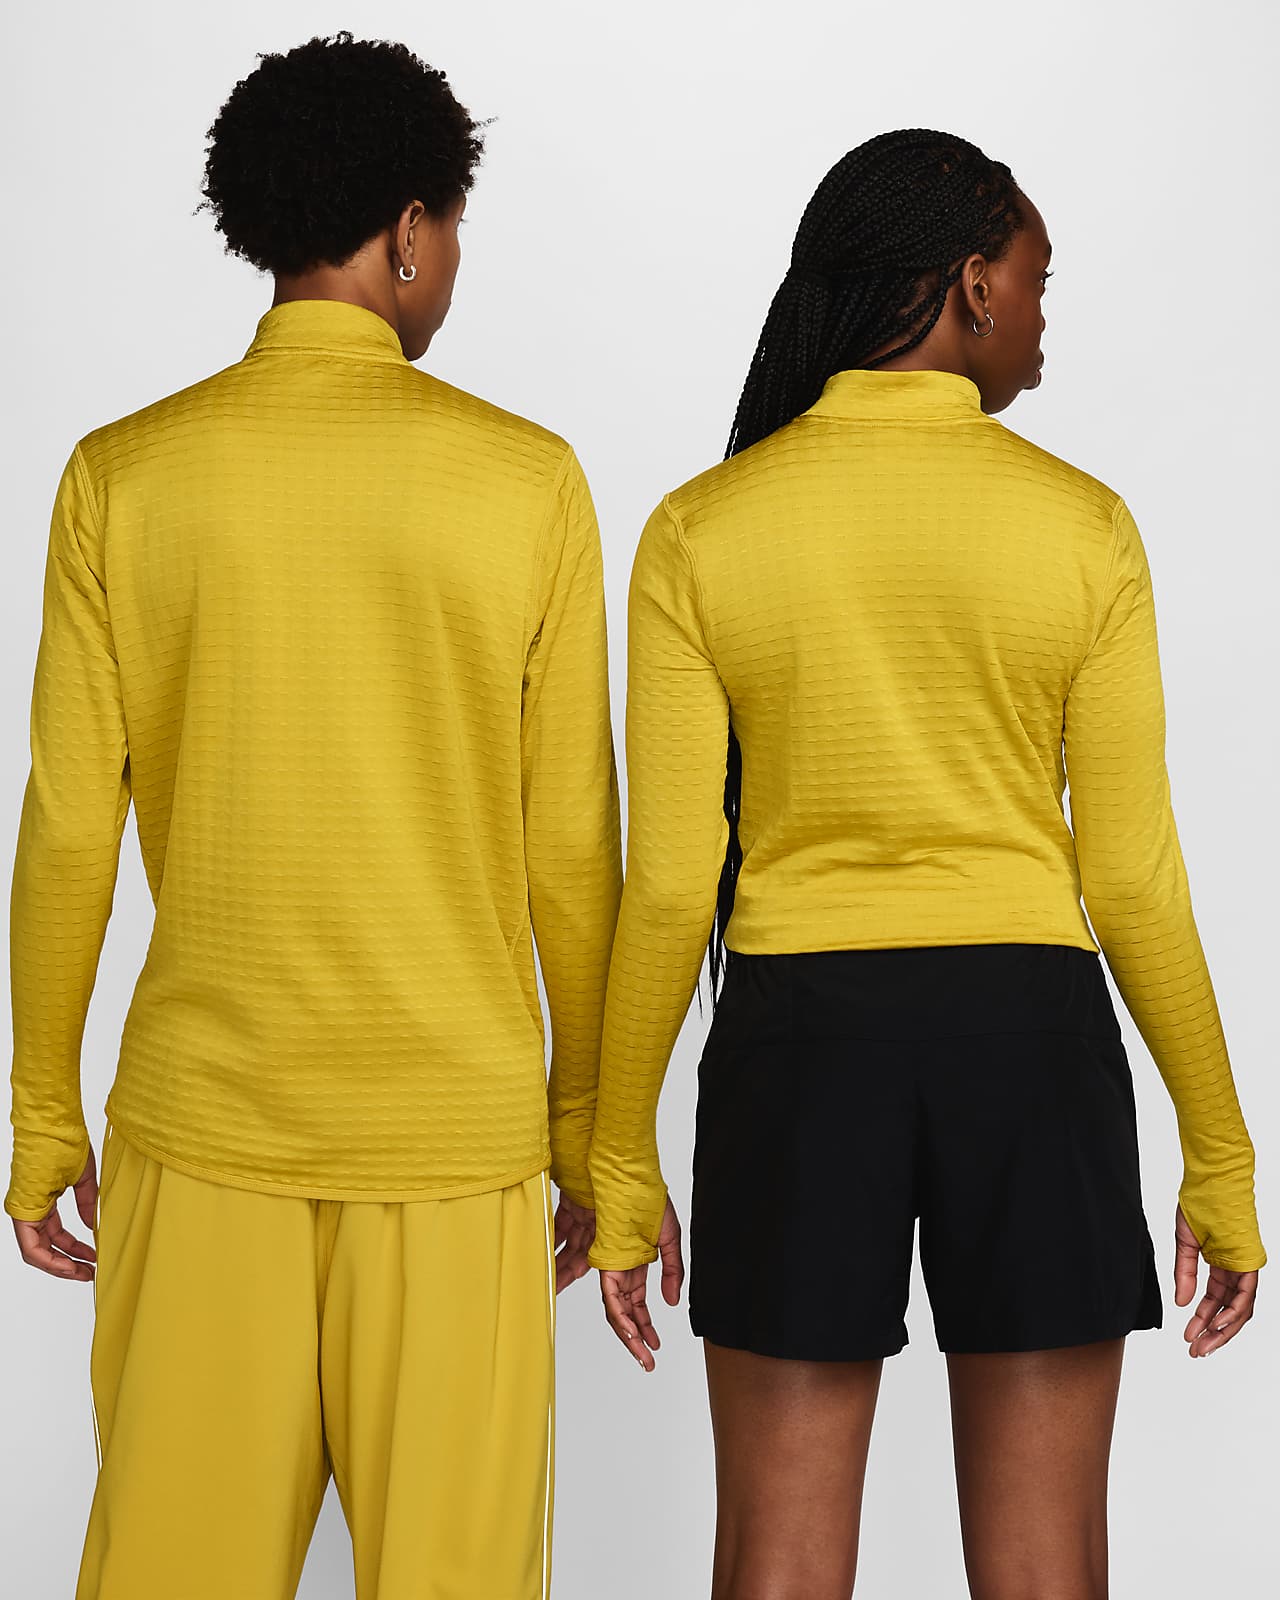 Nike x Patta Half-Zip Long-Sleeve Top